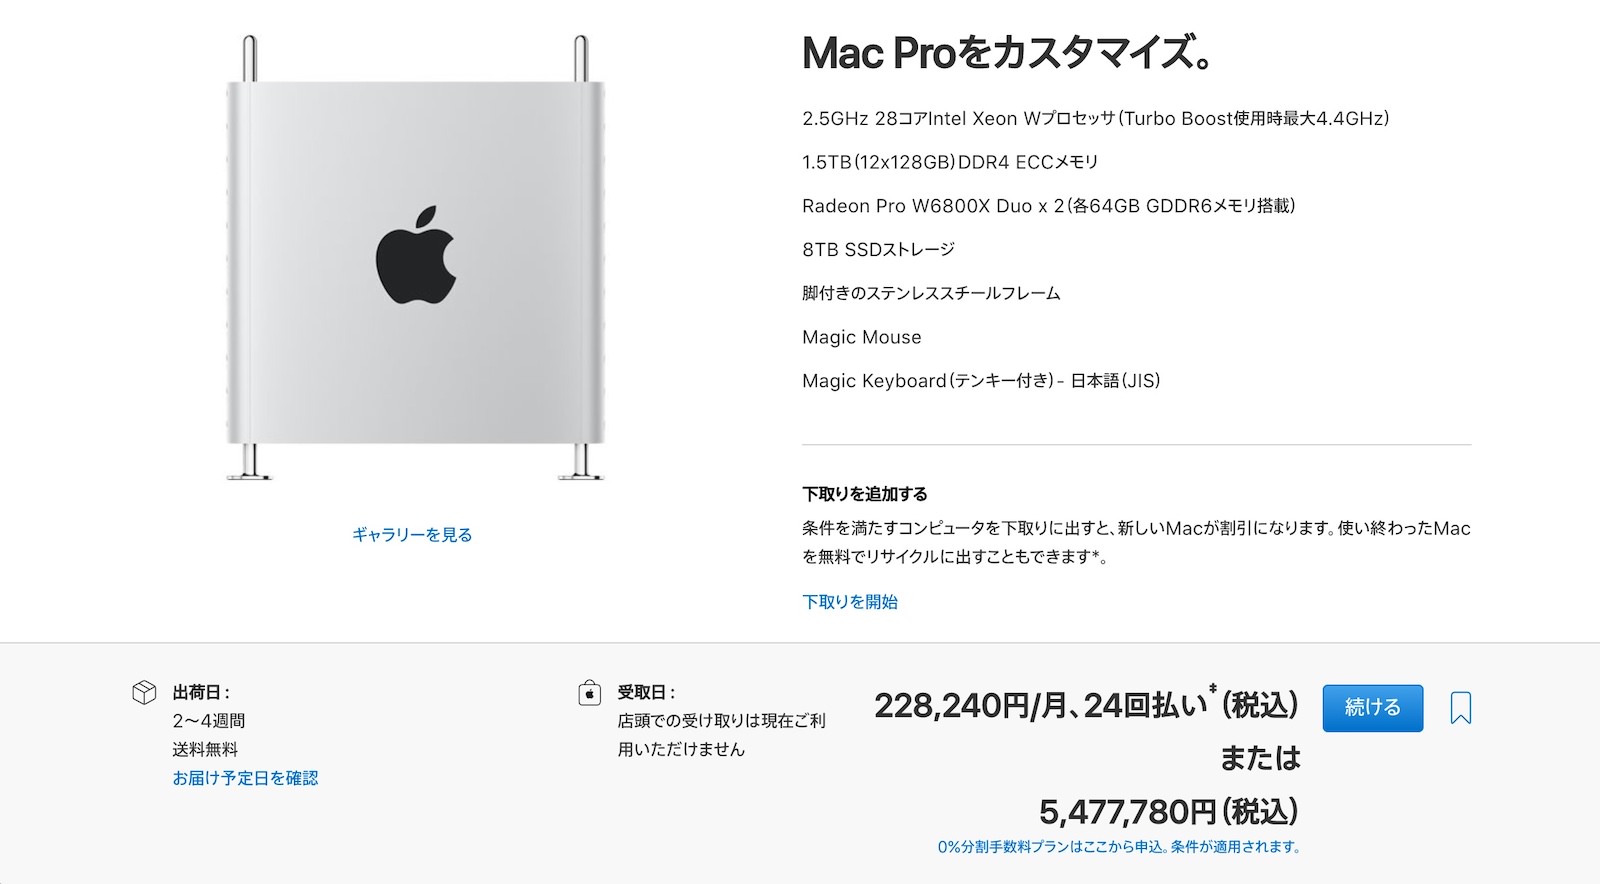 Mac pro 2019 specs 2